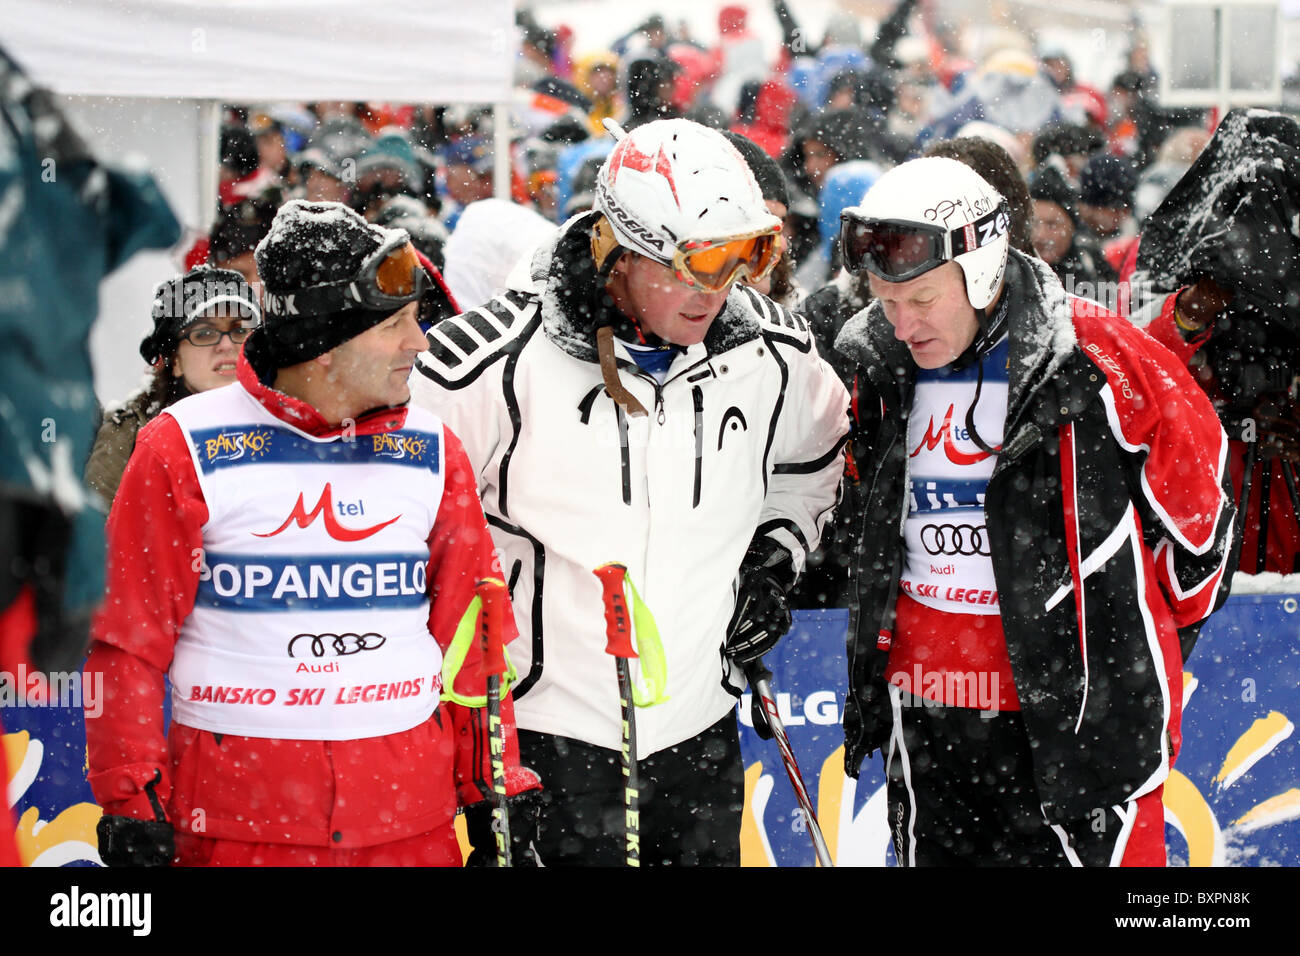 Peter POPANGELOV, Patrick Ortlieb e Peter Mueller, 12.12.2009 Bansko Ski Center, Bulgaria Foto Stock